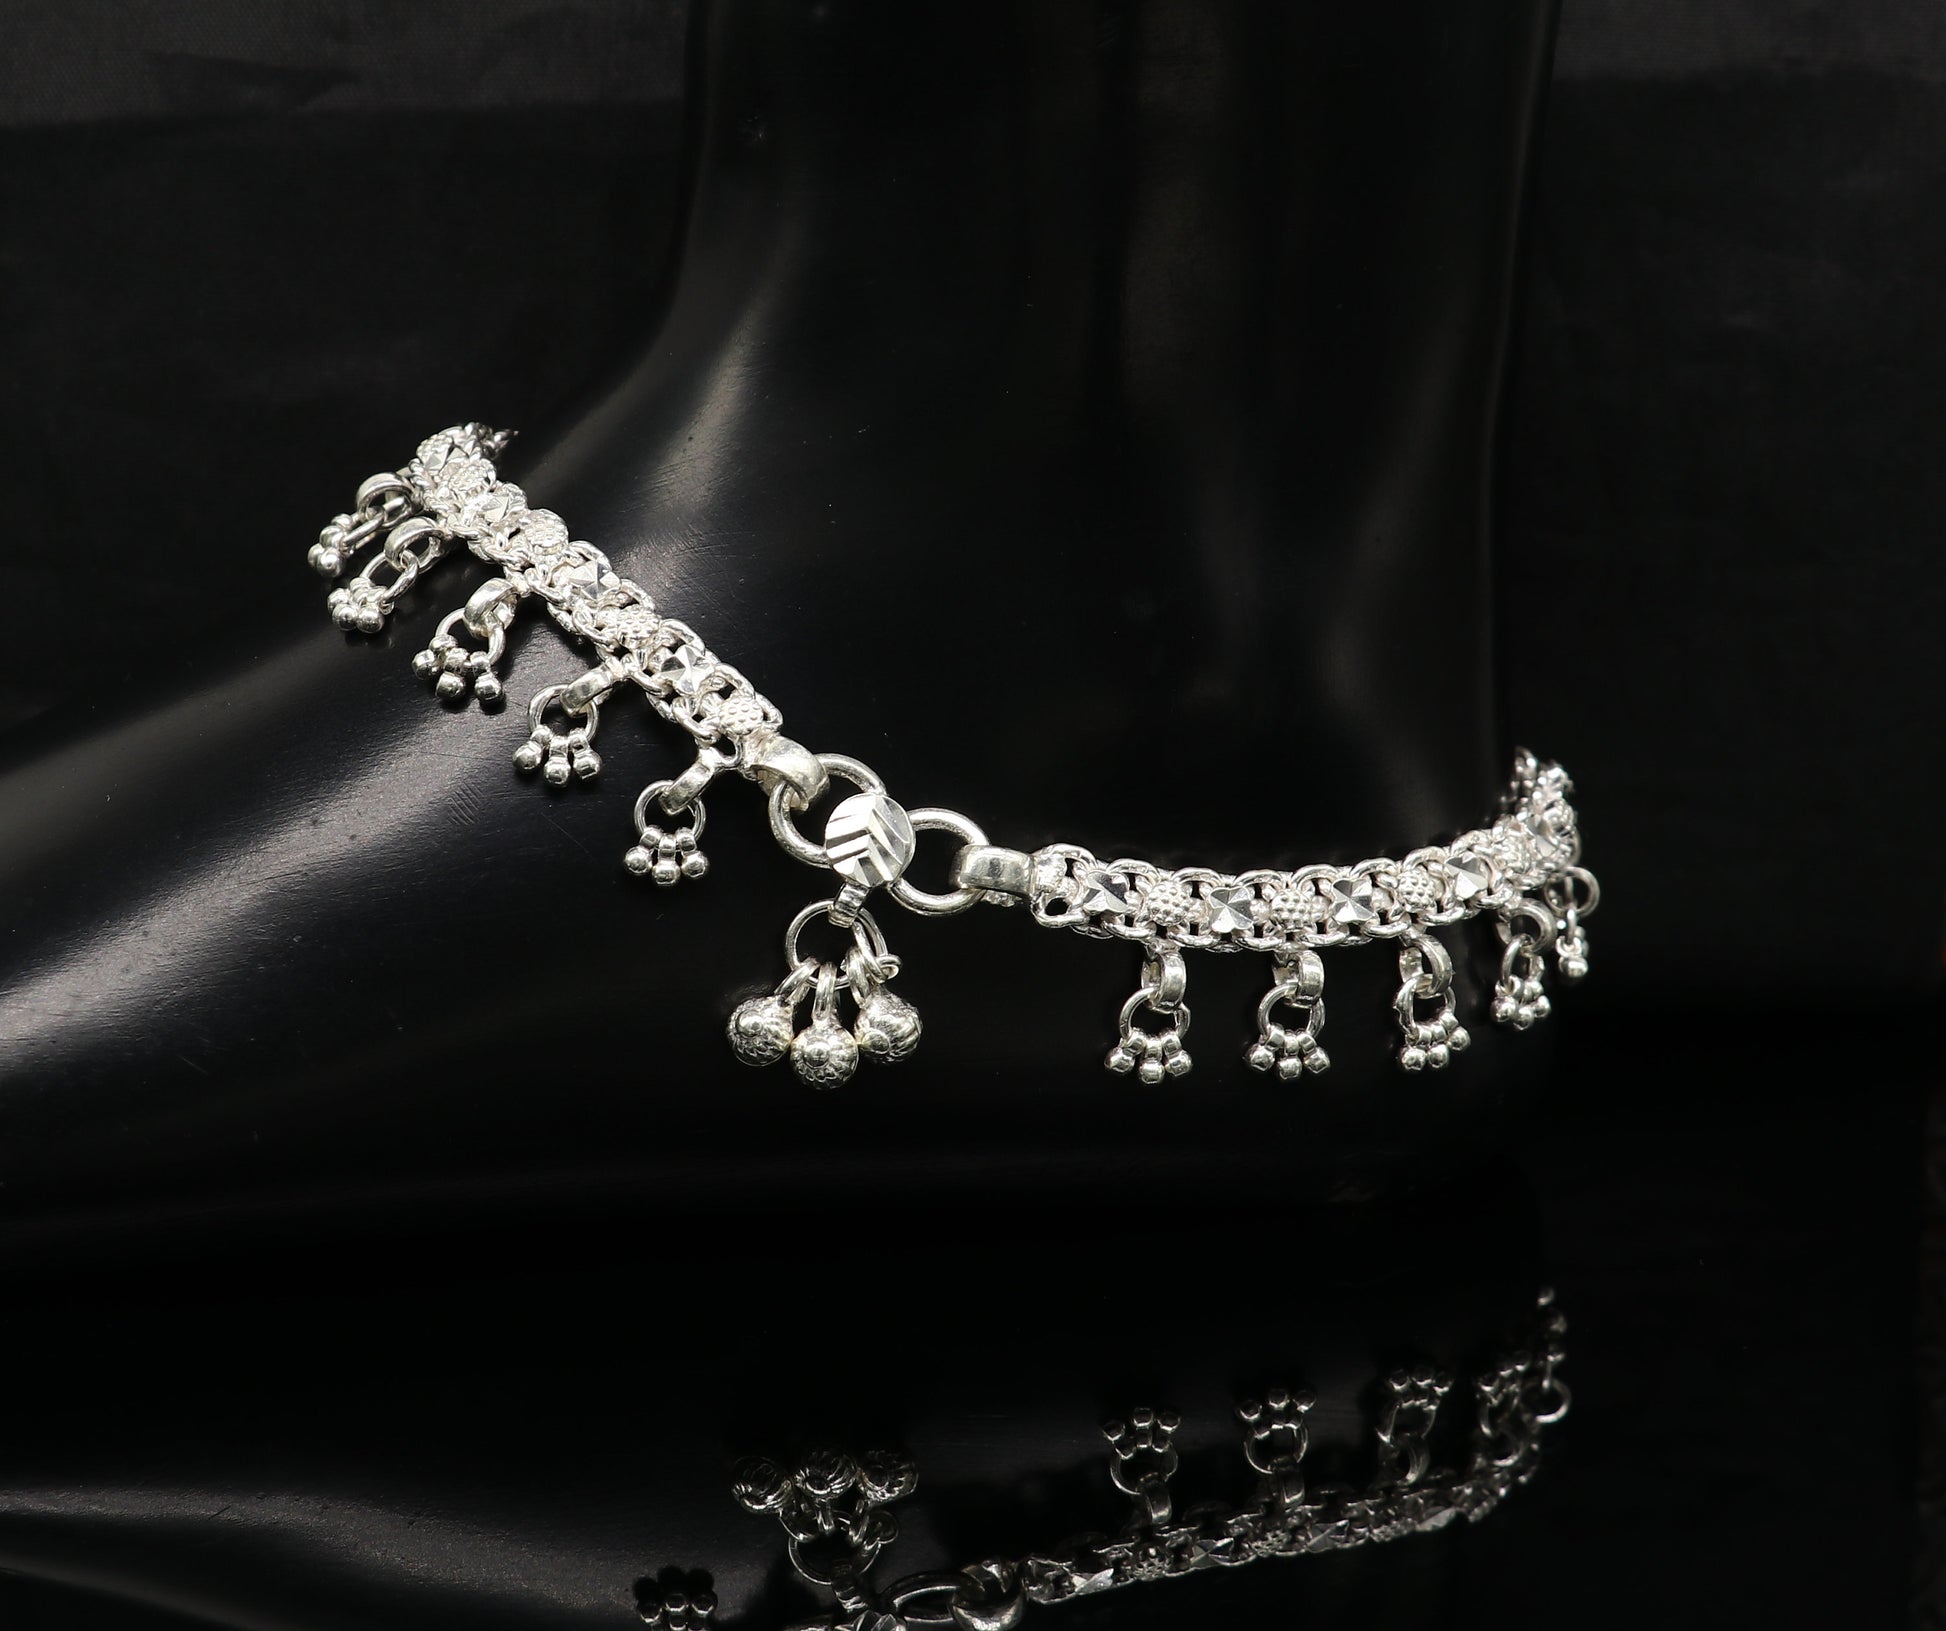 10.5" sterling silver solid handmade vintage stylish anklet bracelet foot bracelet tribal belly dance wedding tribal jewelry gifting ank383 - TRIBAL ORNAMENTS